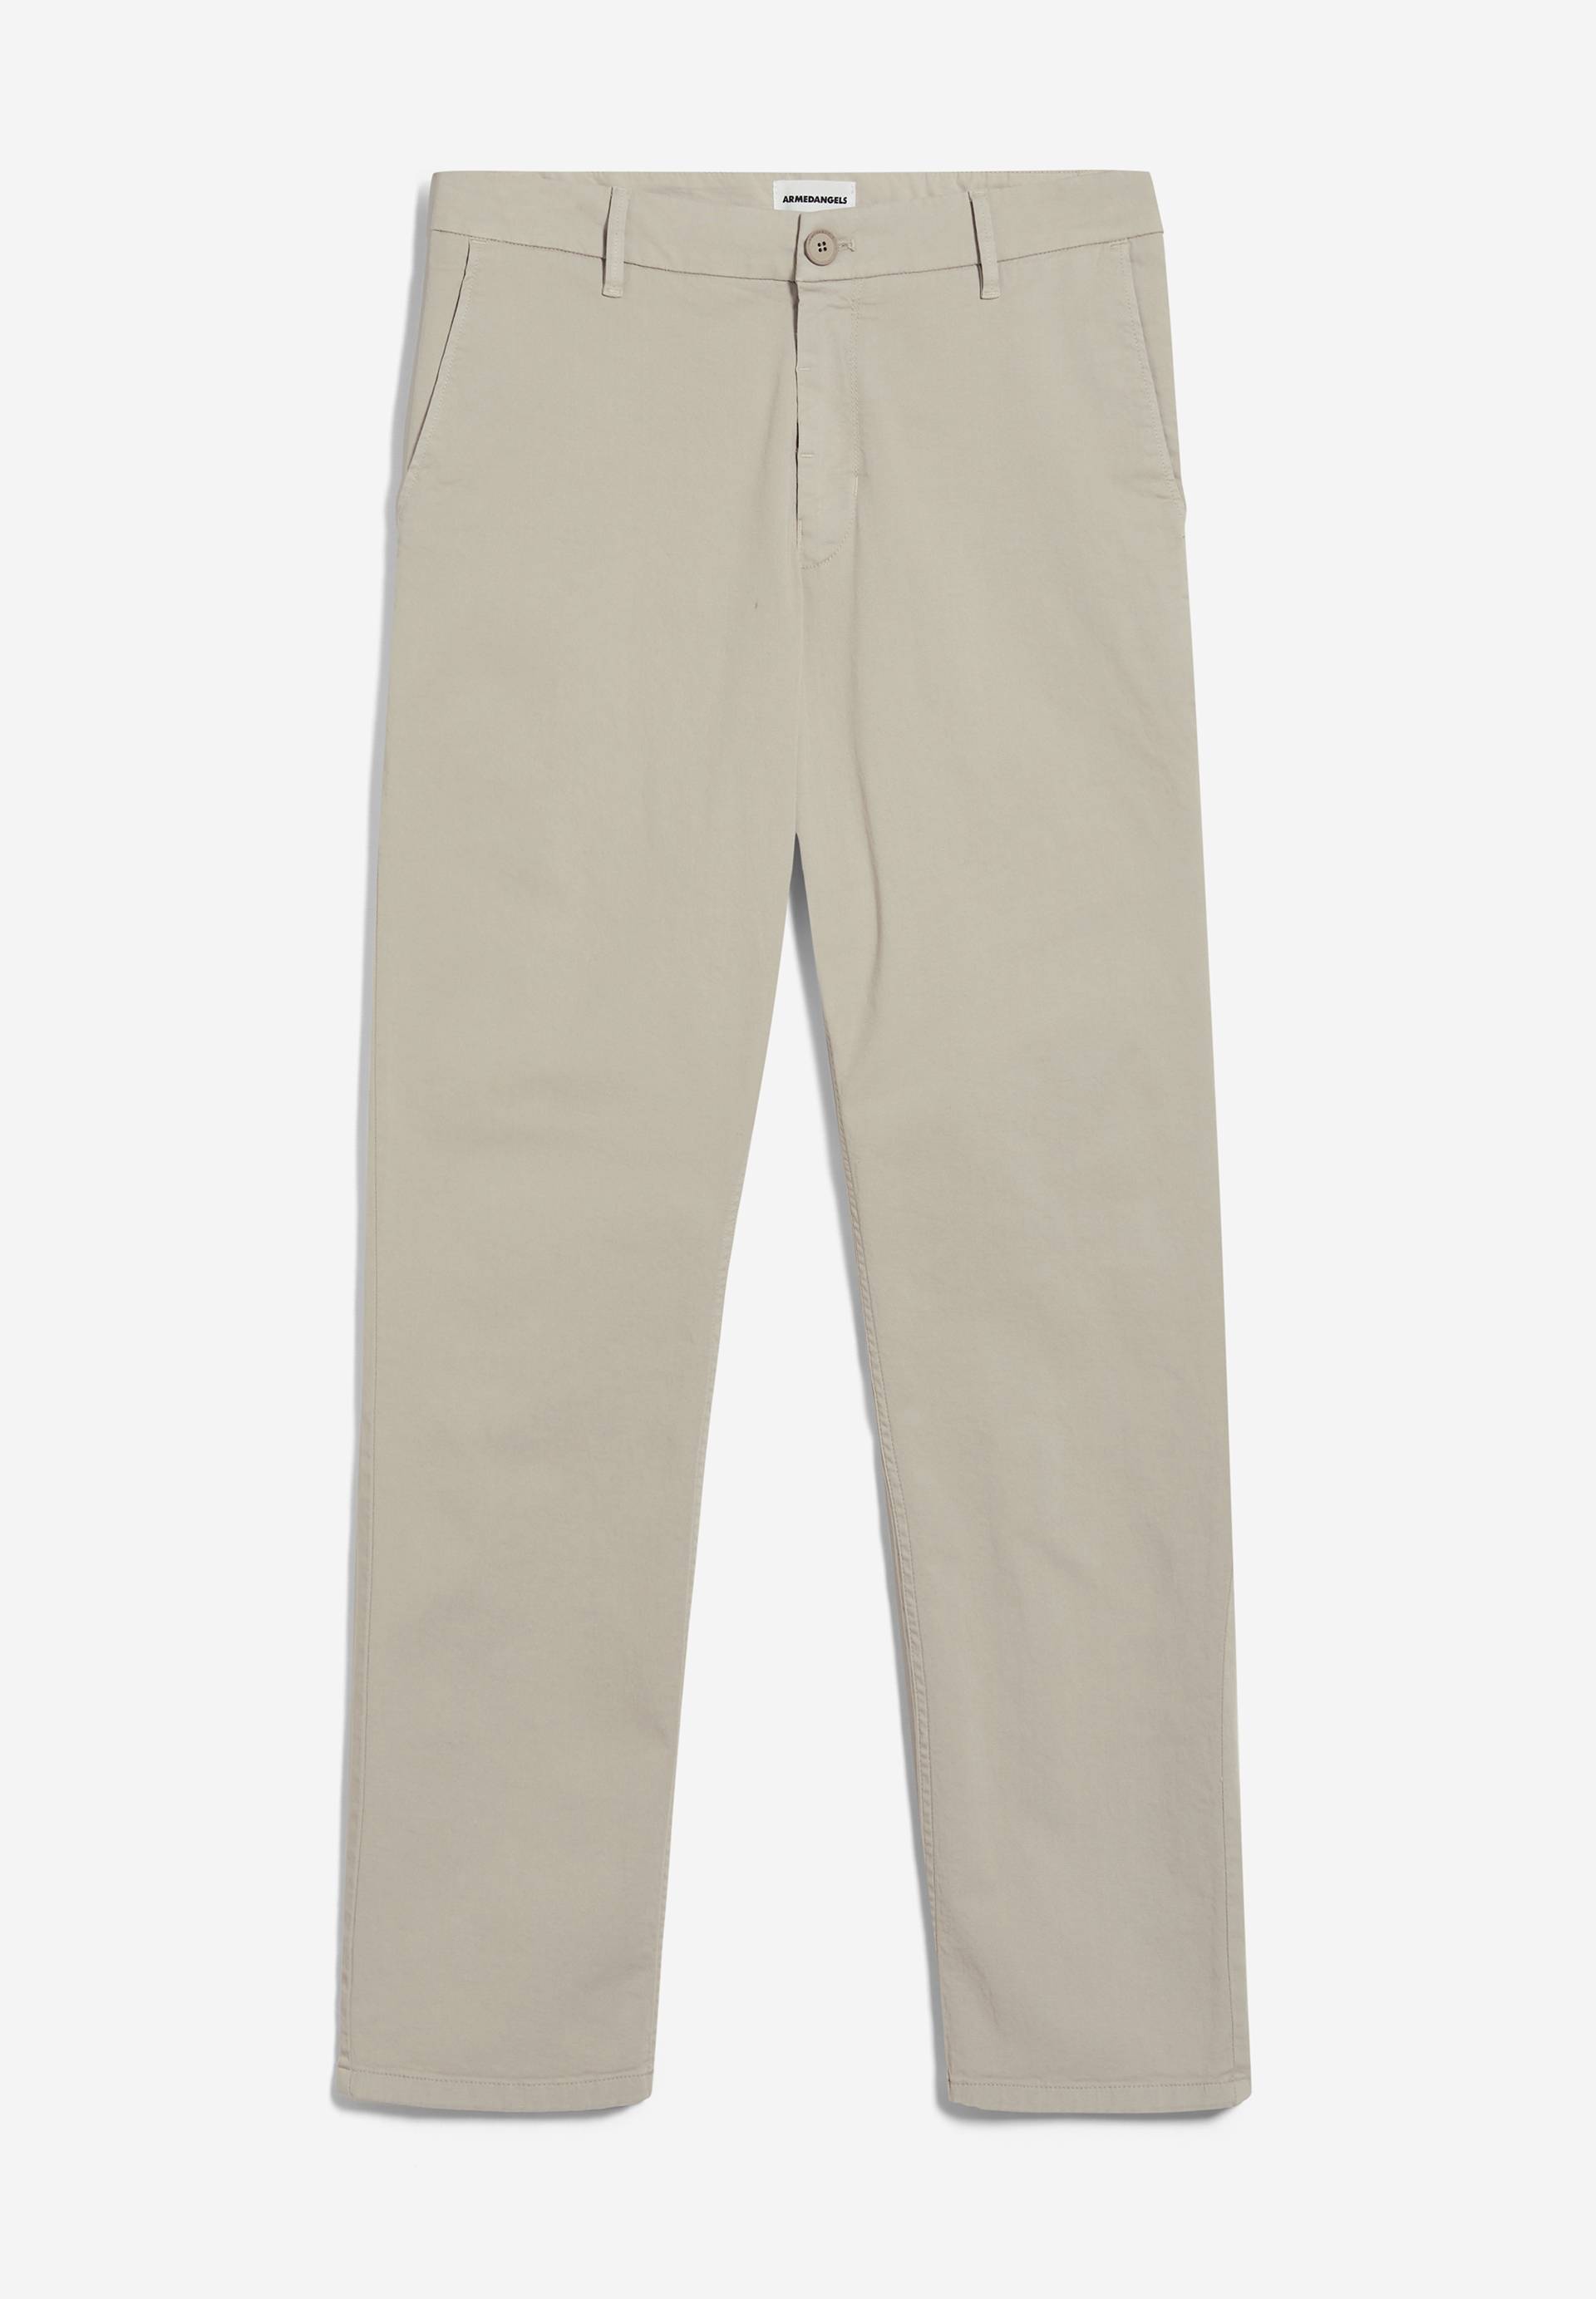 AATHAN Chino Pants Regular Fit made of Organic Cotton Mix